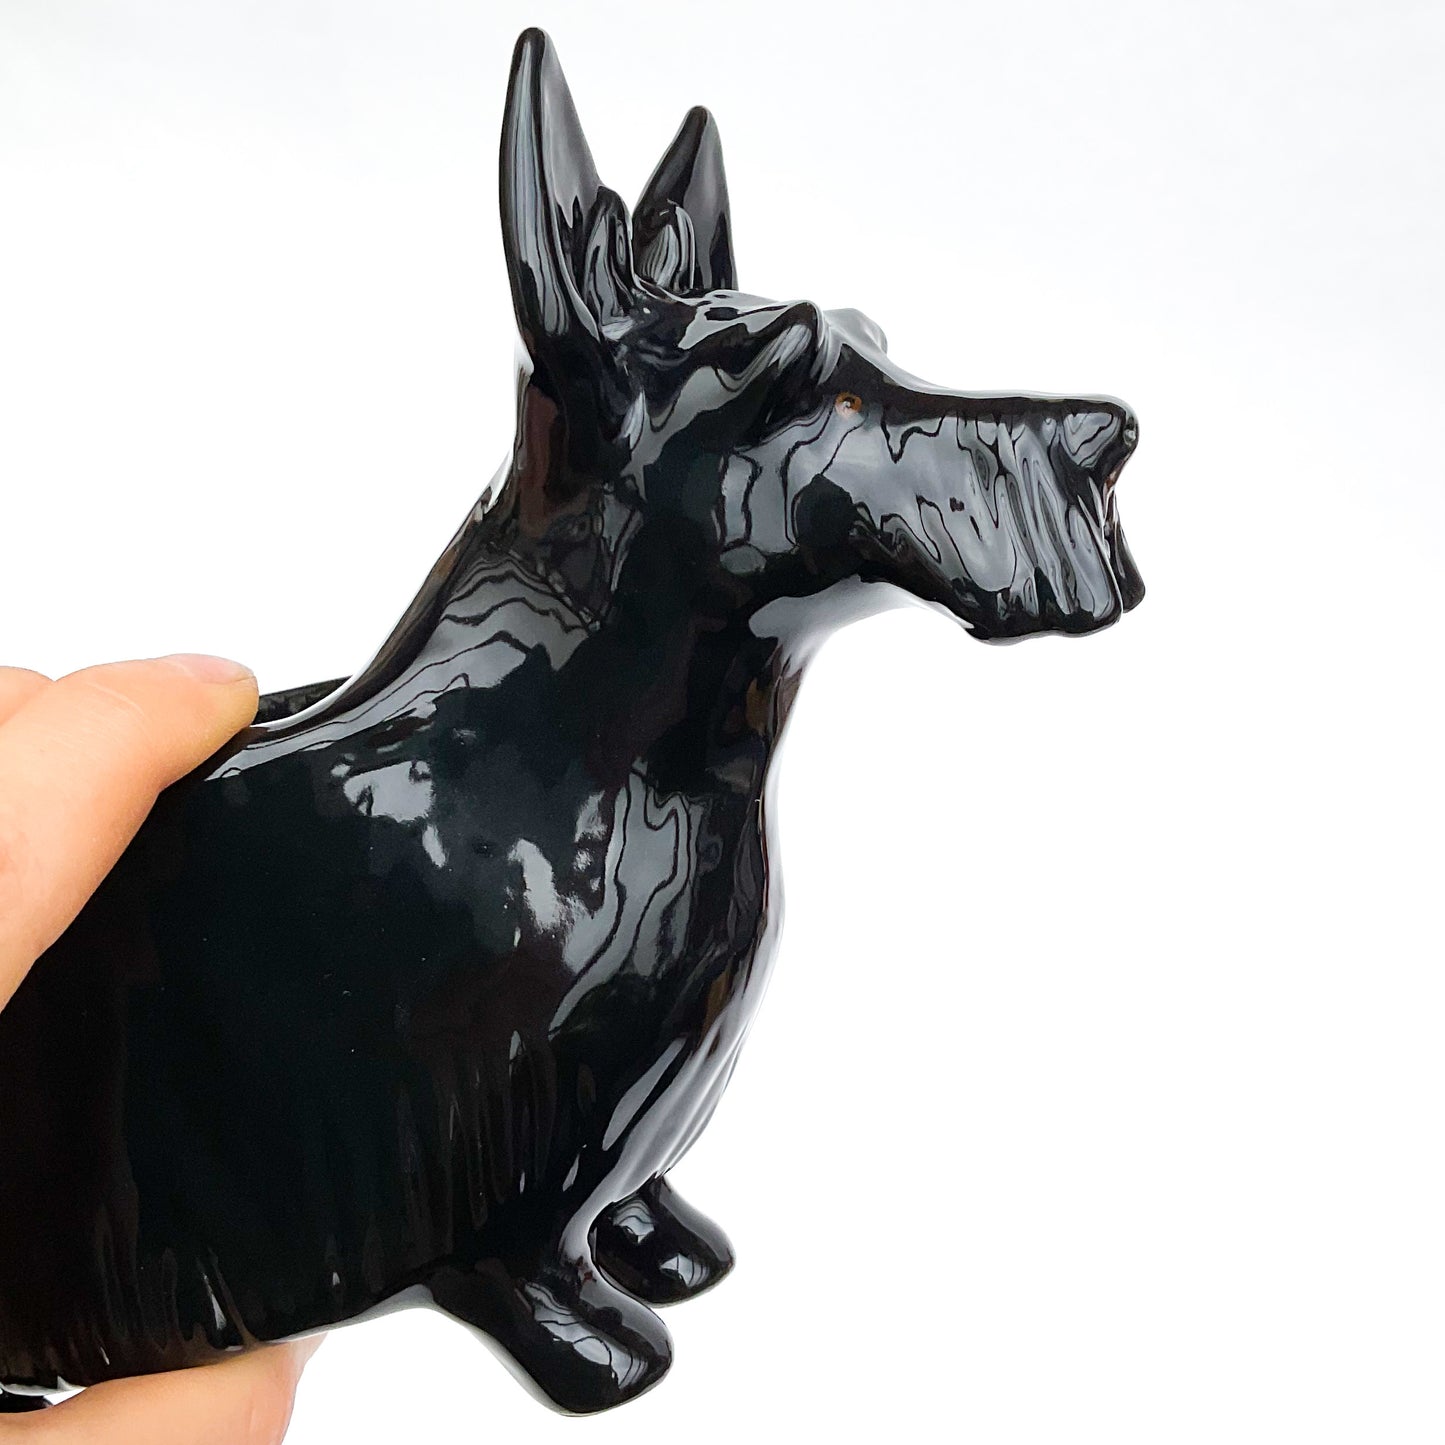 Scottish Terrier Dog Planter - Ceramic Dog Plant Pot